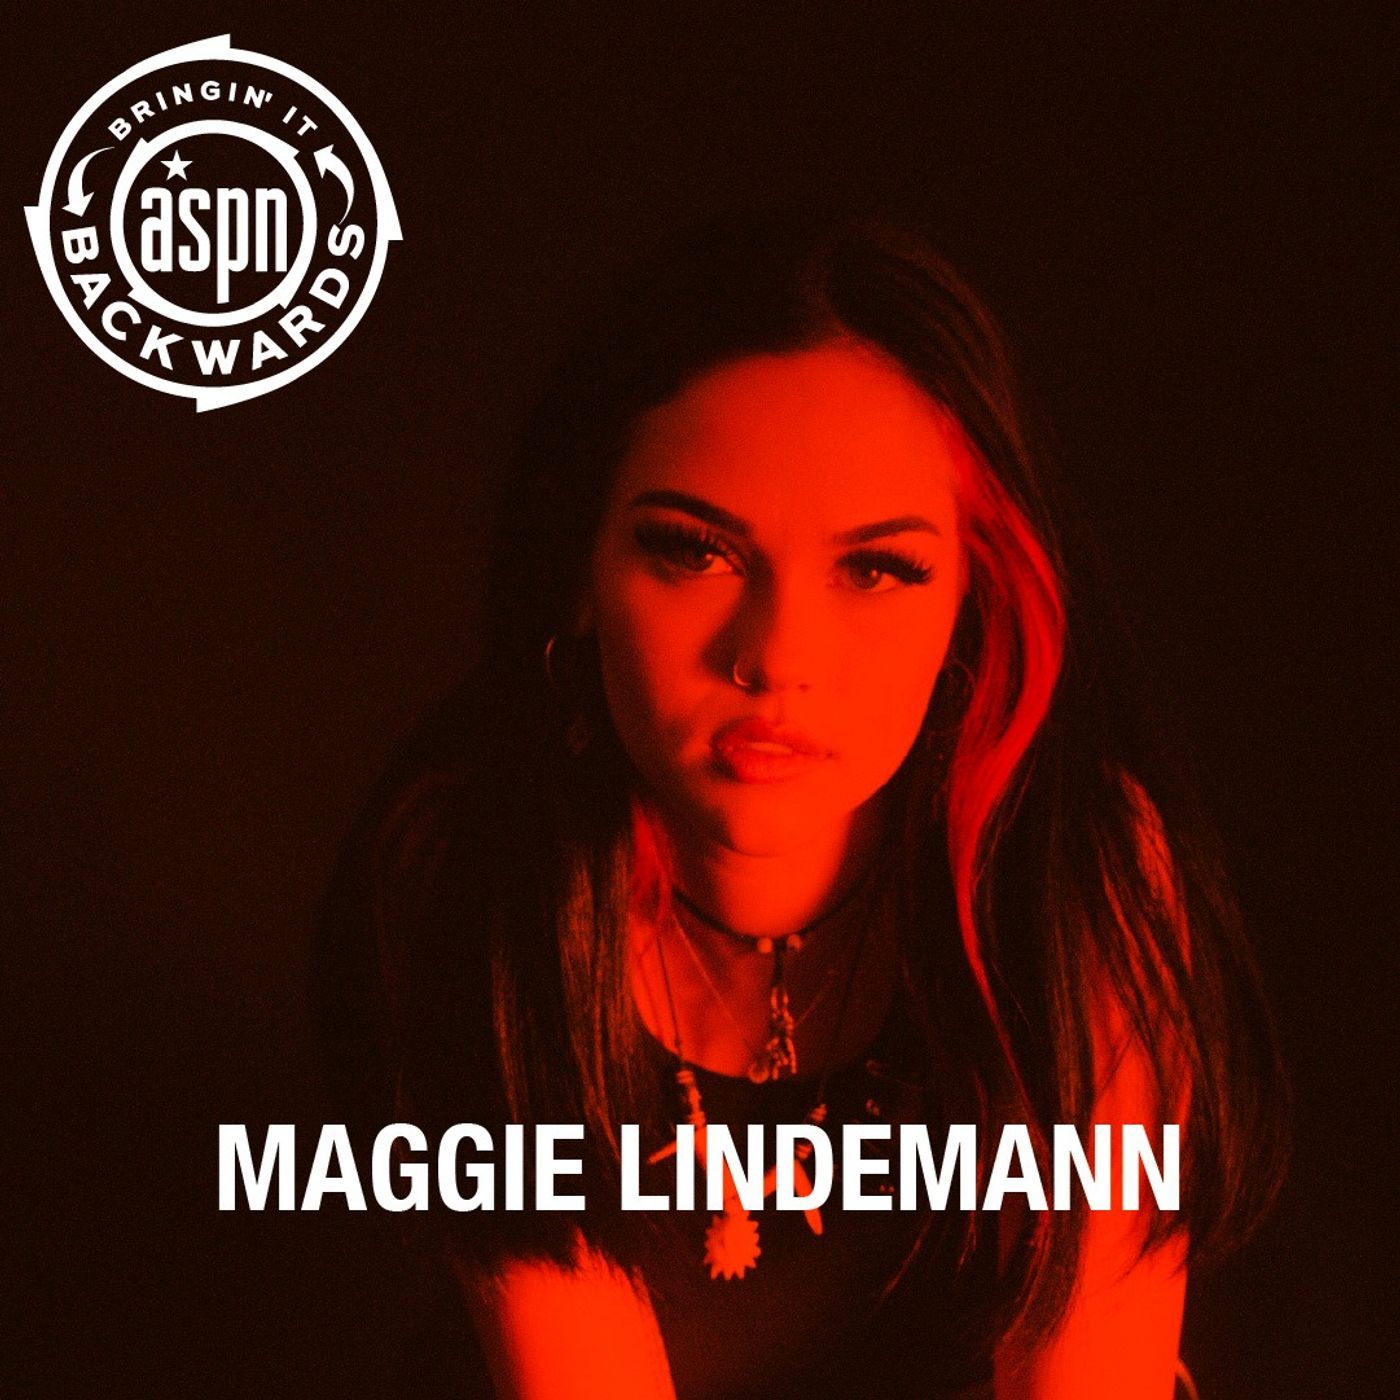 Interview with Maggie Lindemann Image